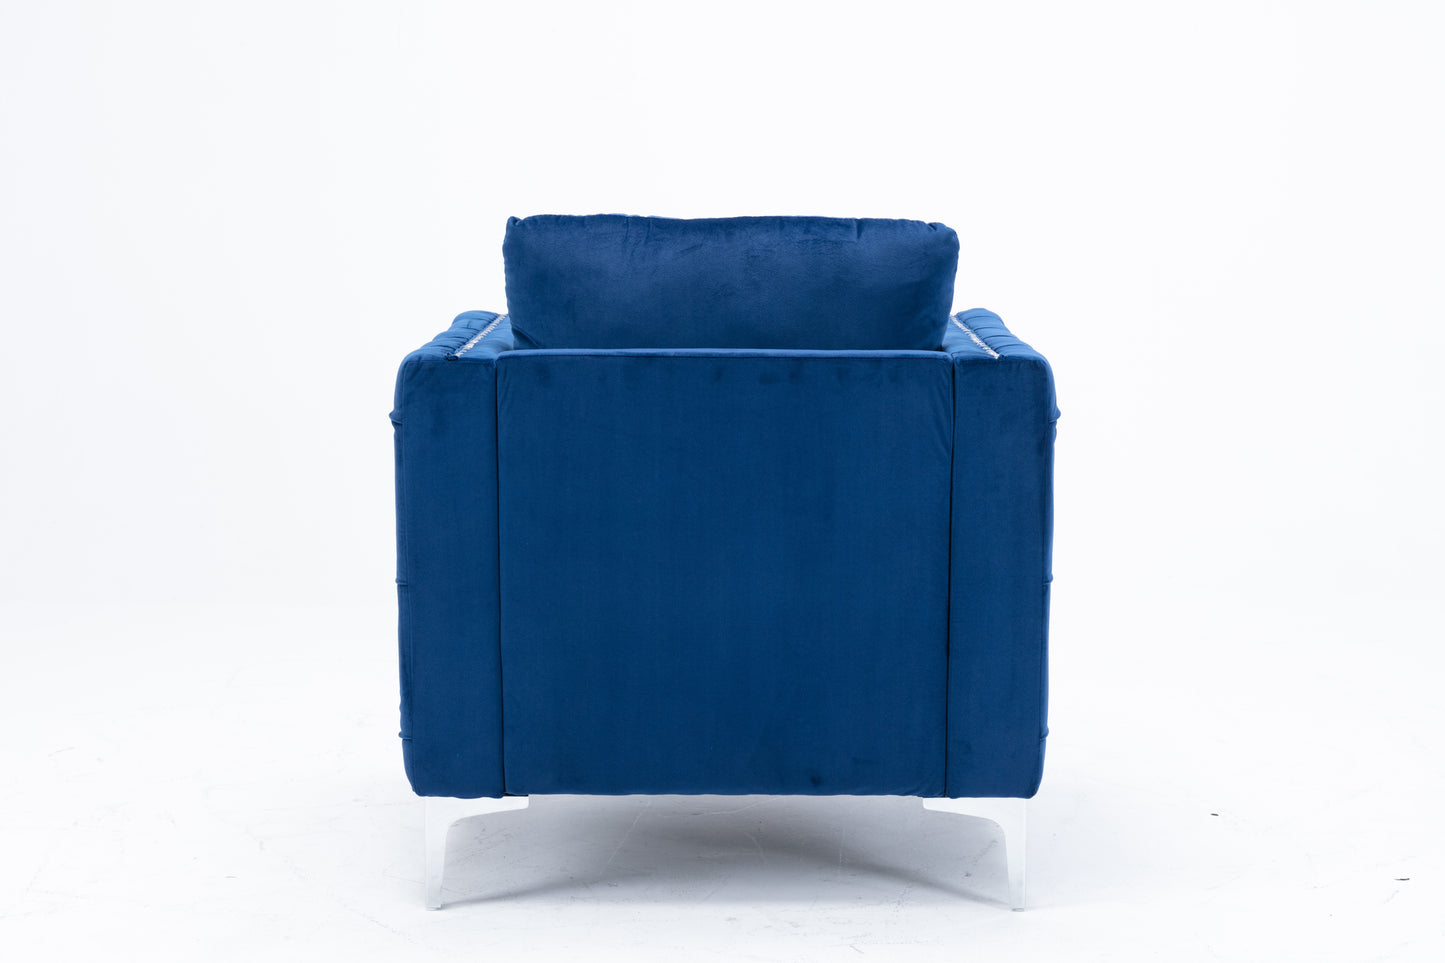 Modern Velvet Armchair Tufted Button Accent Chair